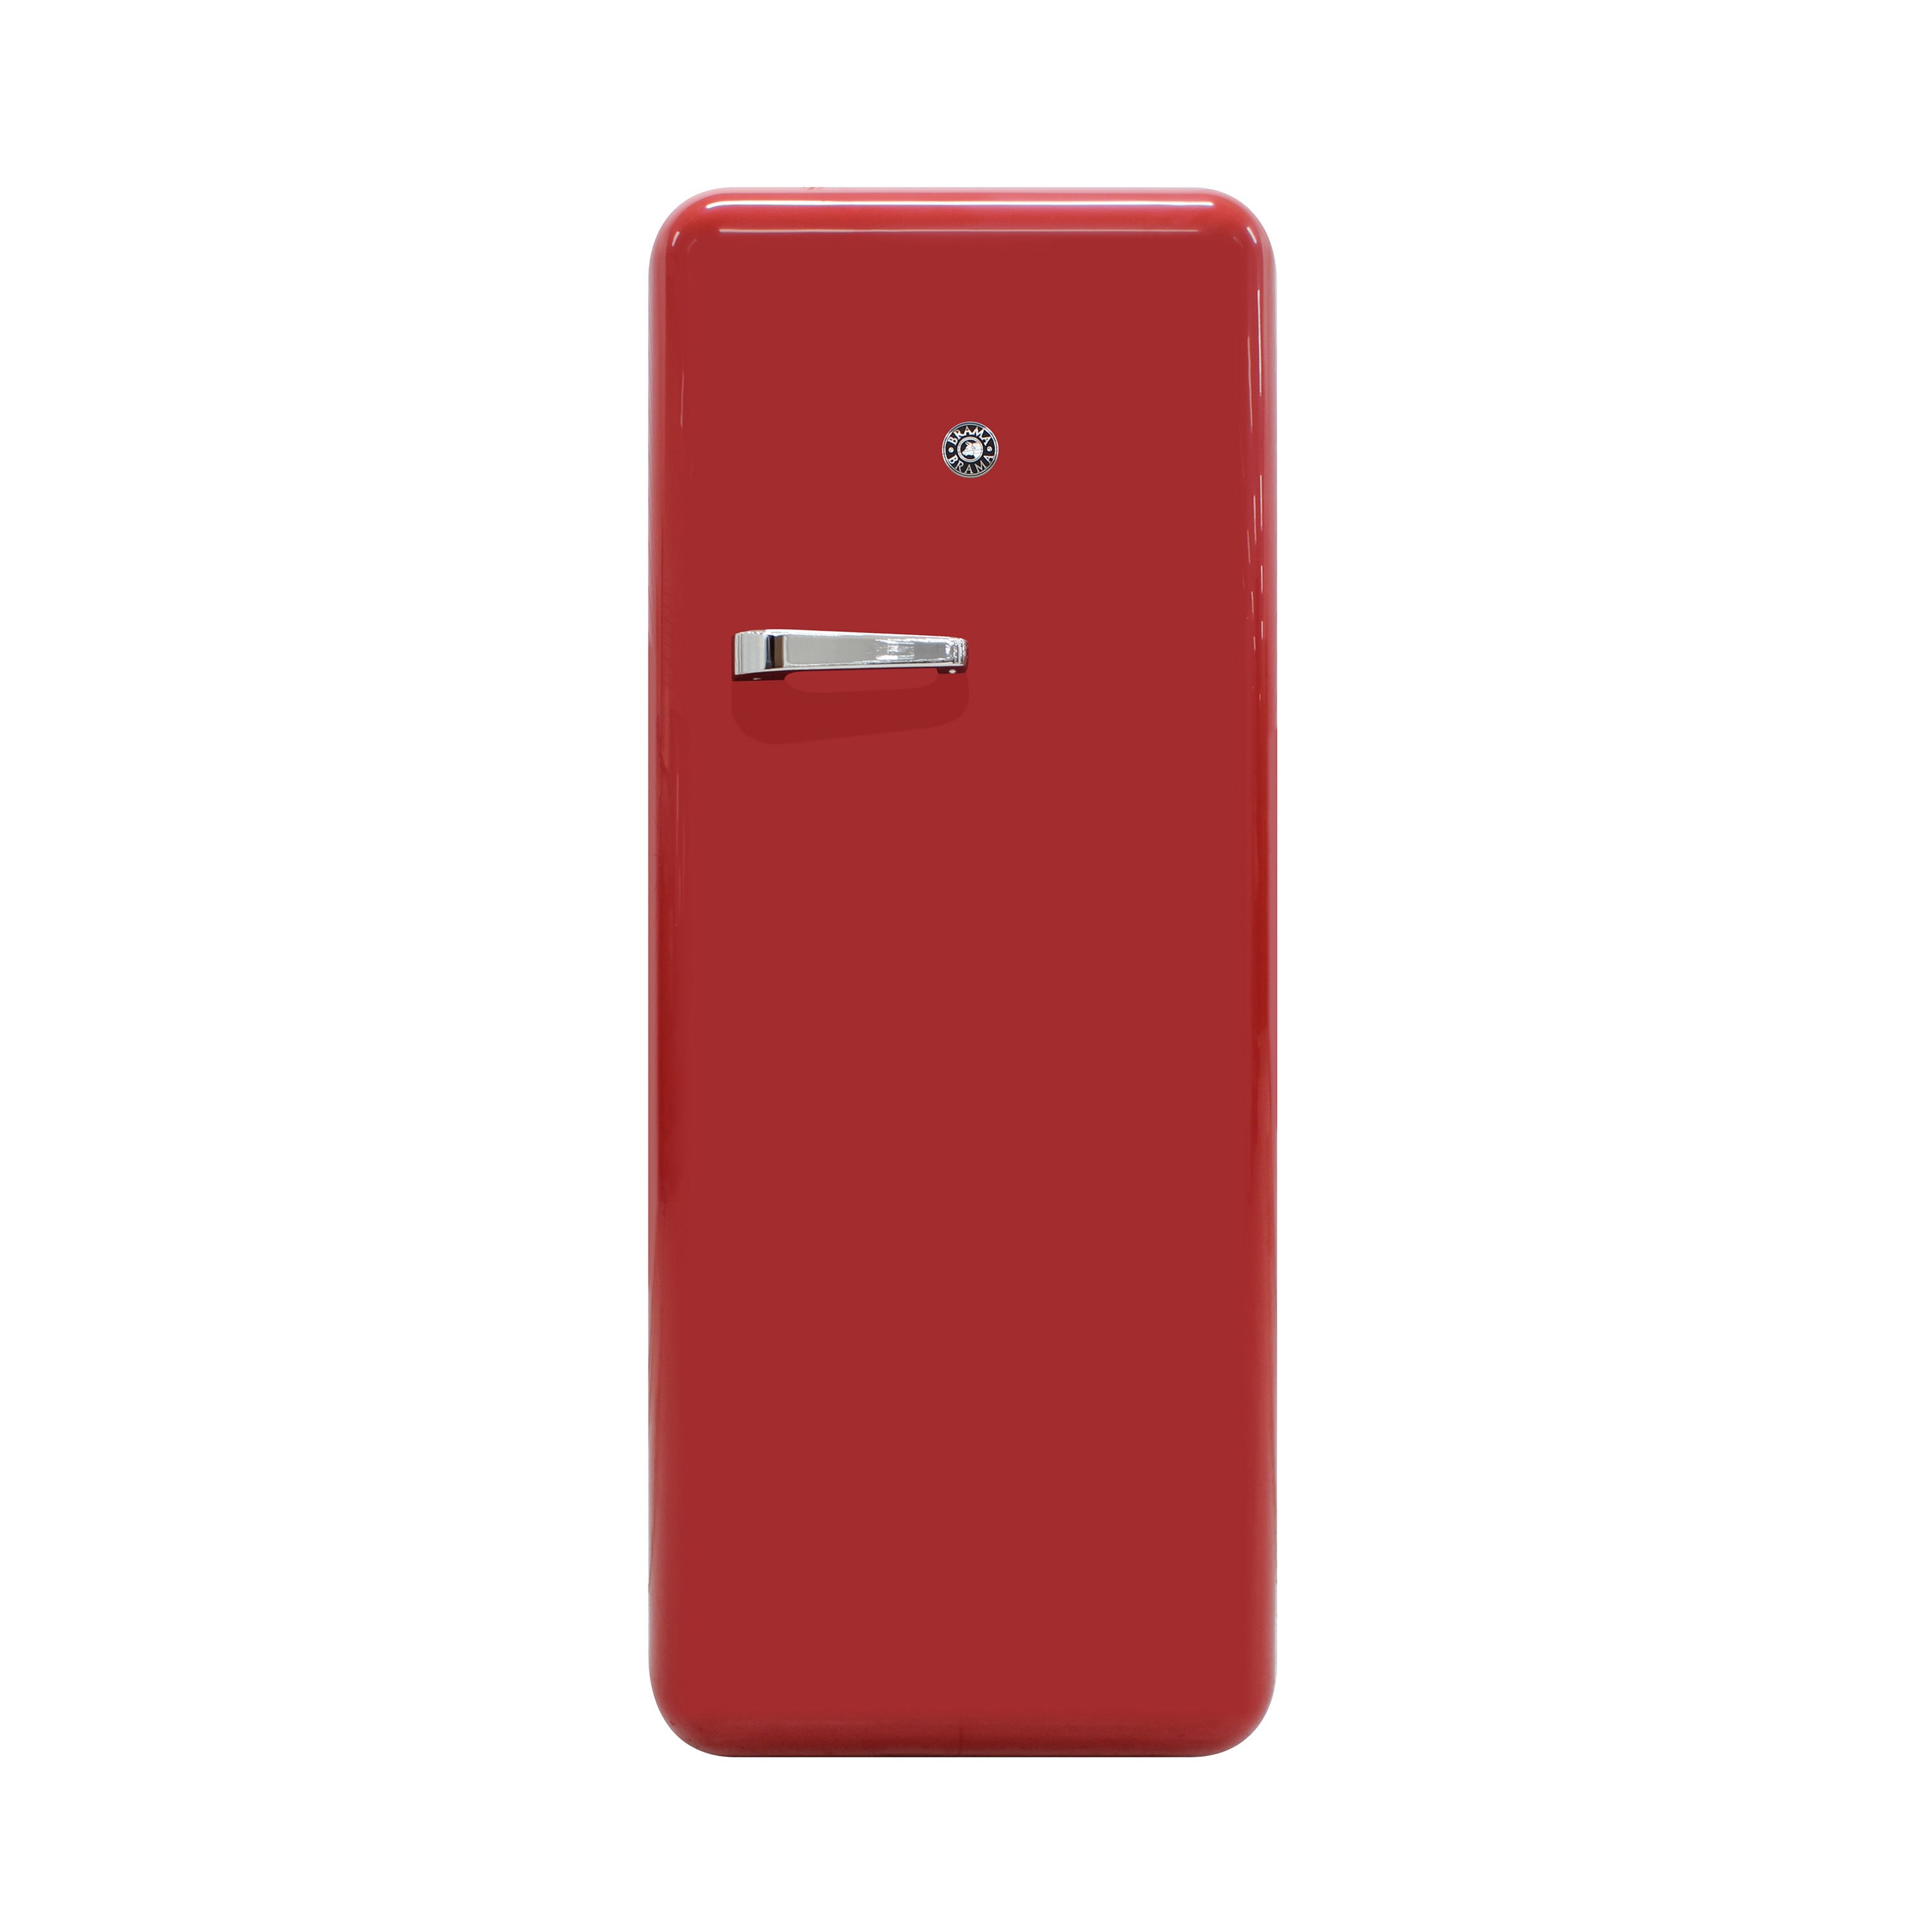 Vinotemp - BR-RETRO-01-R, Brama by Vinotemp Retro Refrigerator with Solid Steel Door, in Red